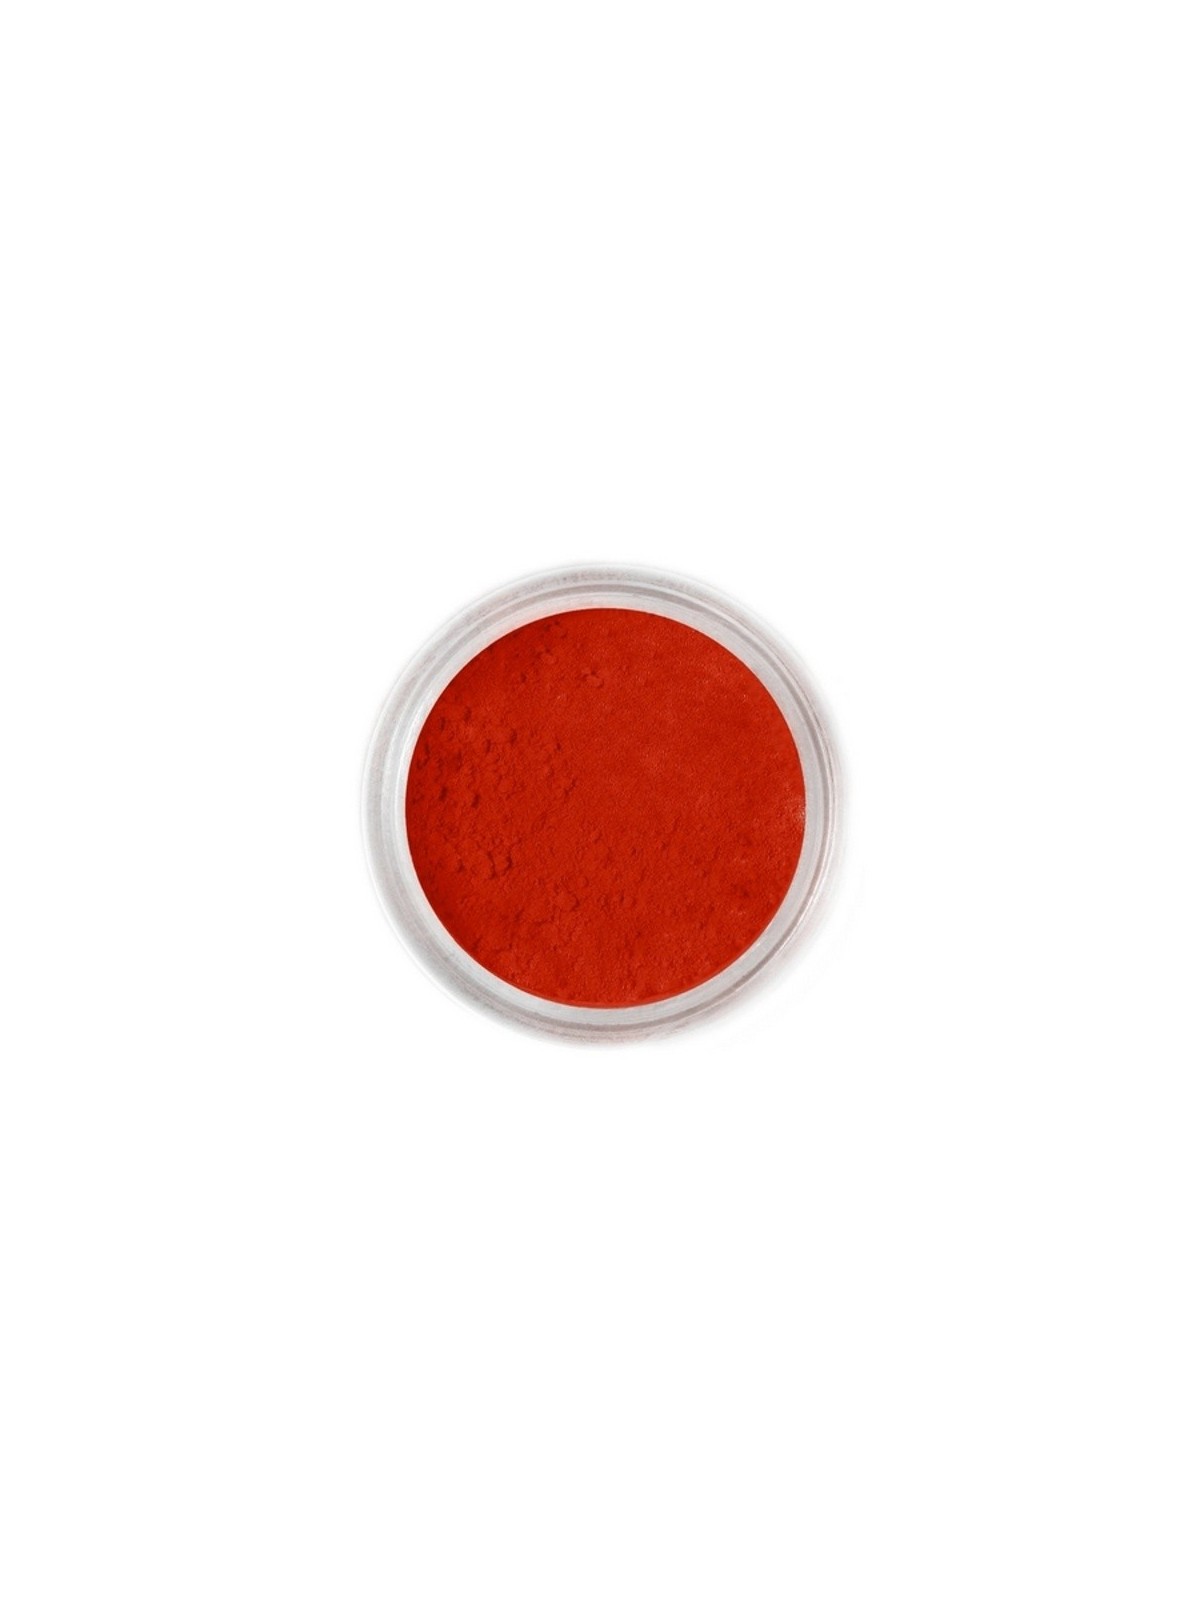 Jedlá prachová barva Fractal - Bloody Mary, Vérnaarancs (1,5 g)